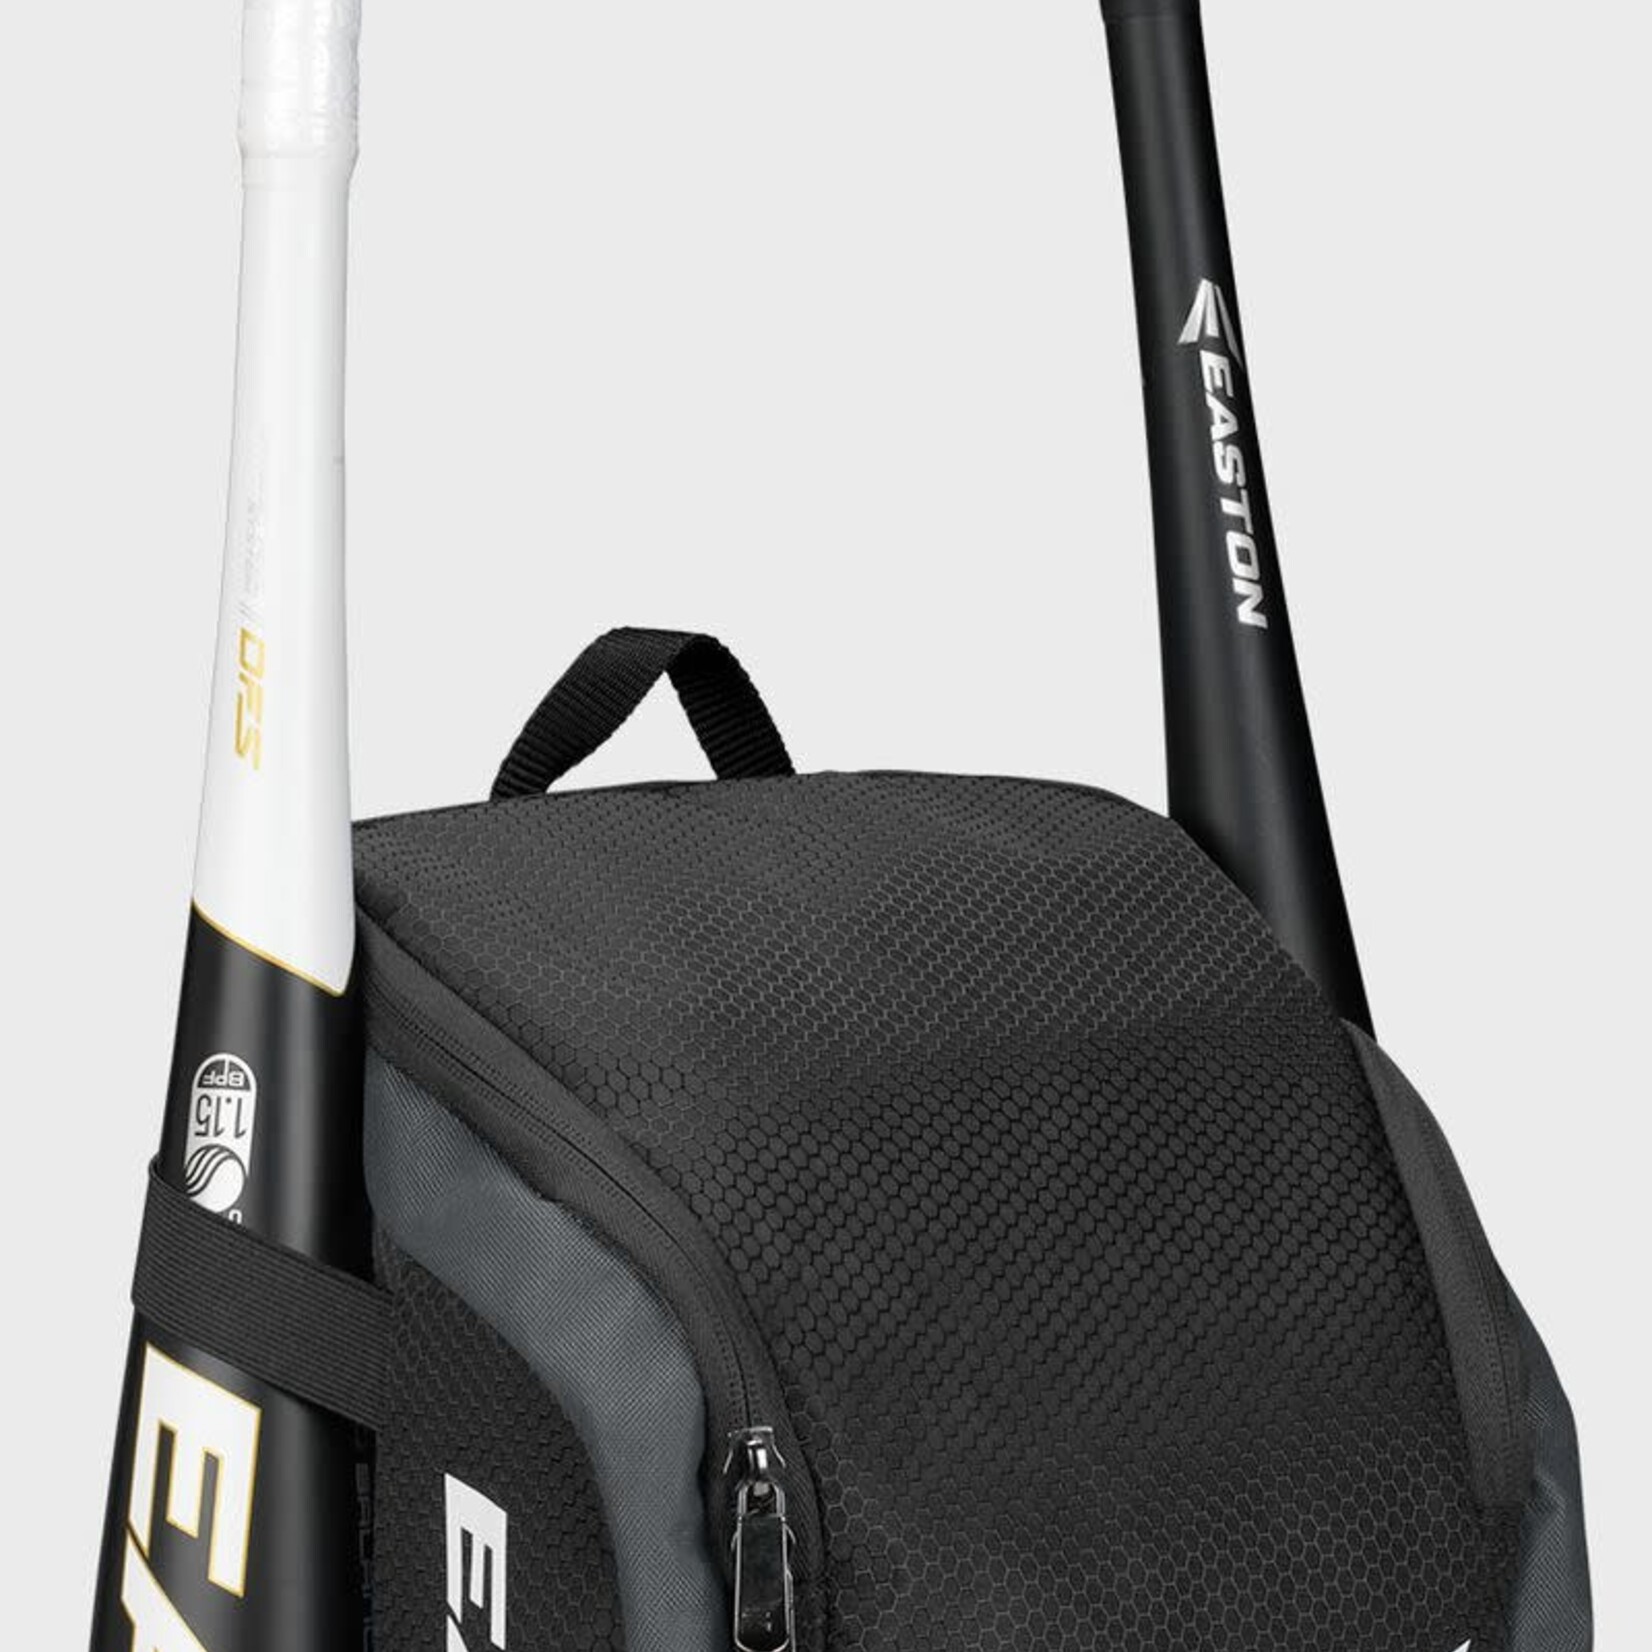 Easton Easton Baseball Bag, Game Ready Backpack, Youth